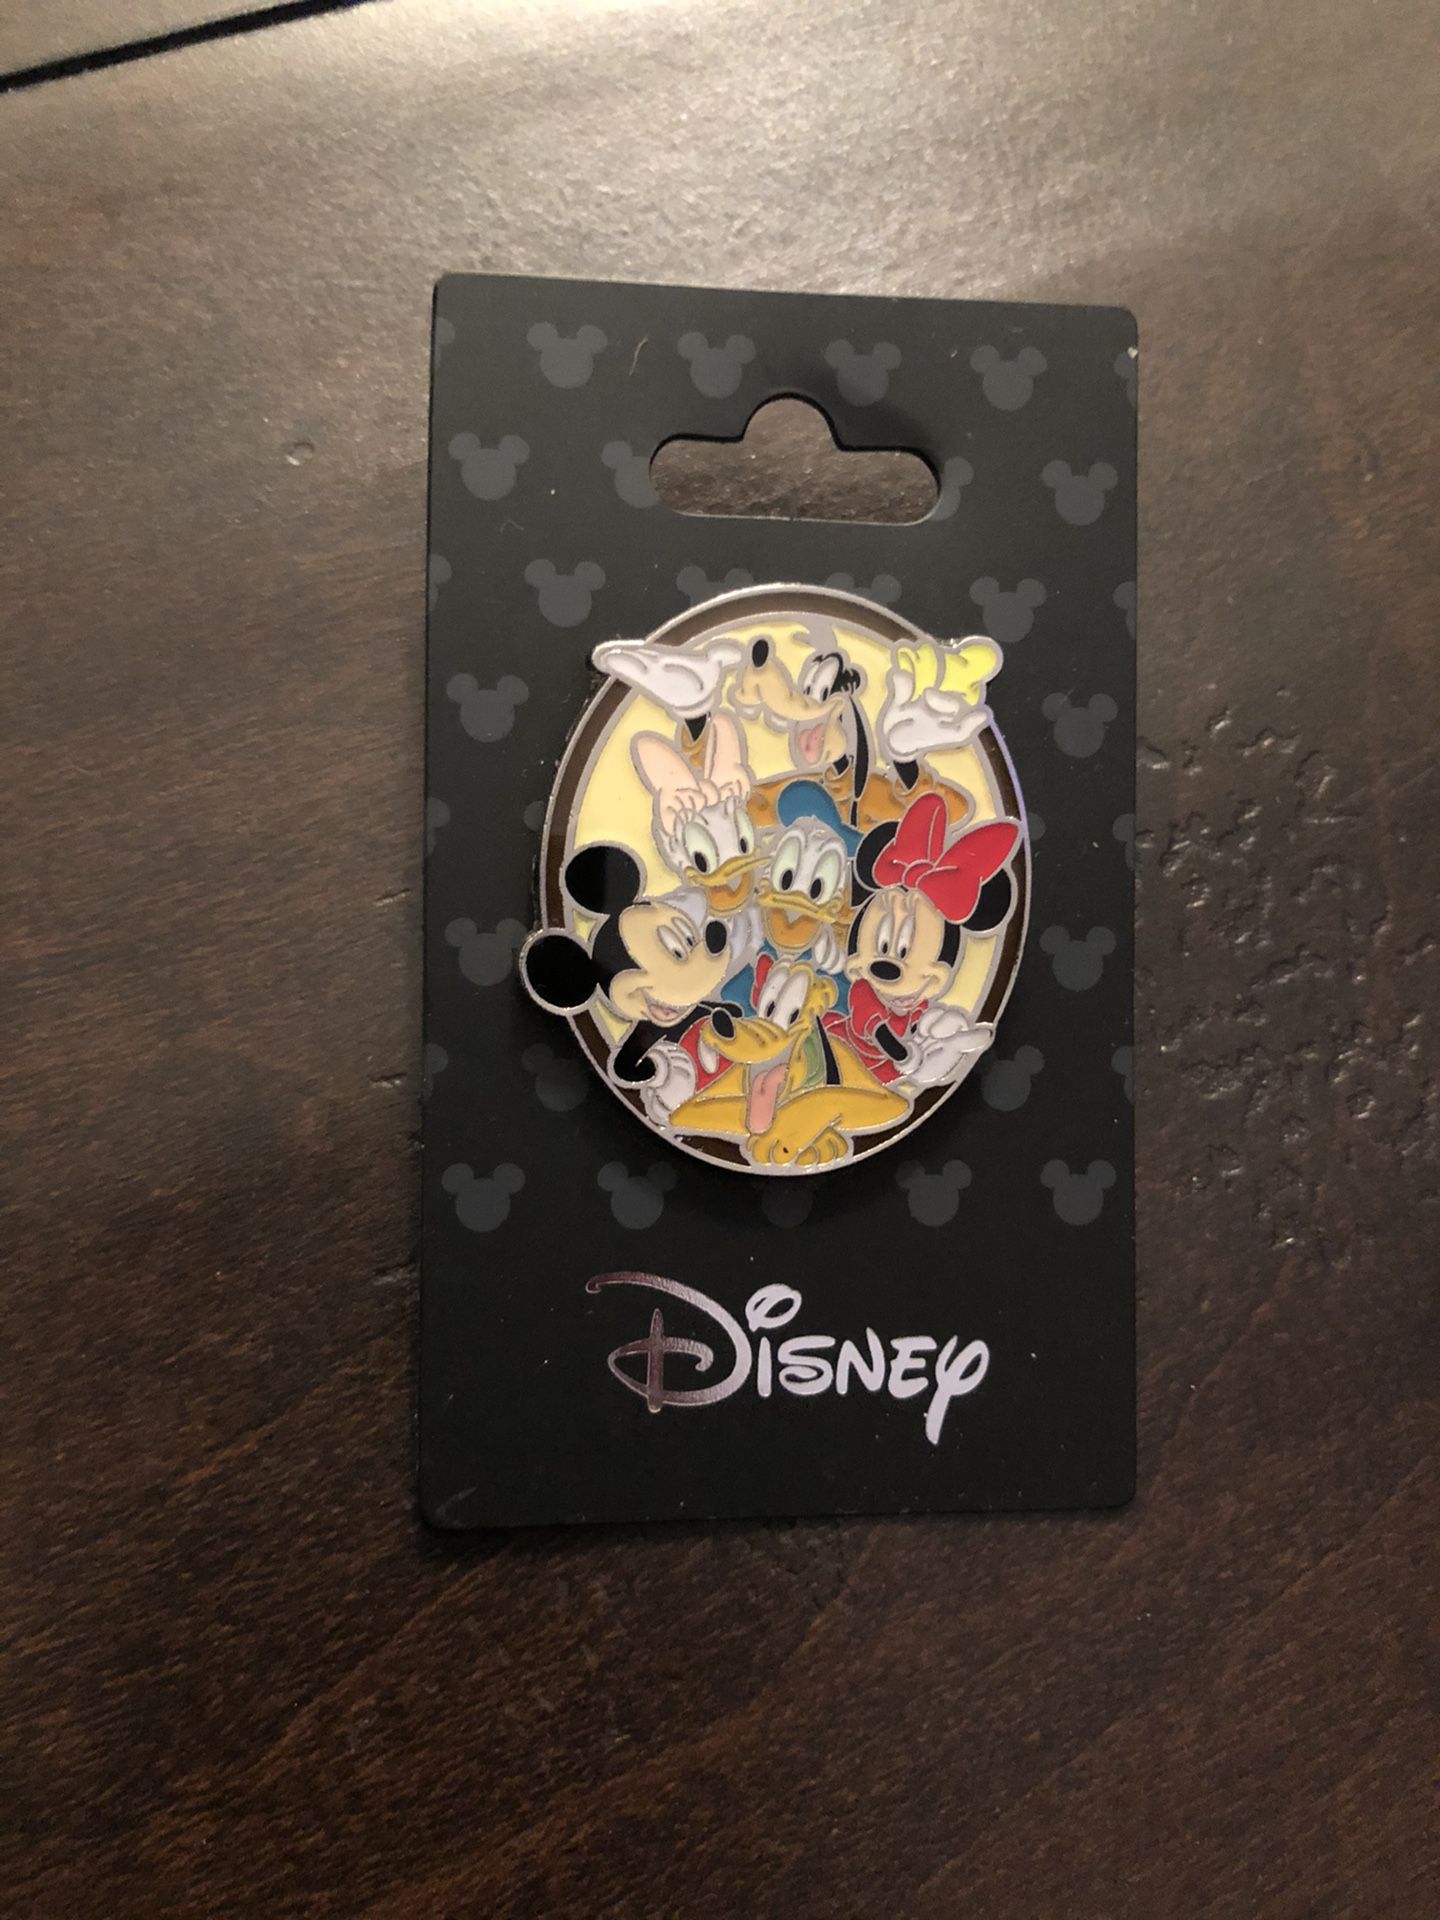 Disney Pin, Mickey and gang: Pluto Minnie, Donald, Daisy and Goofy pin